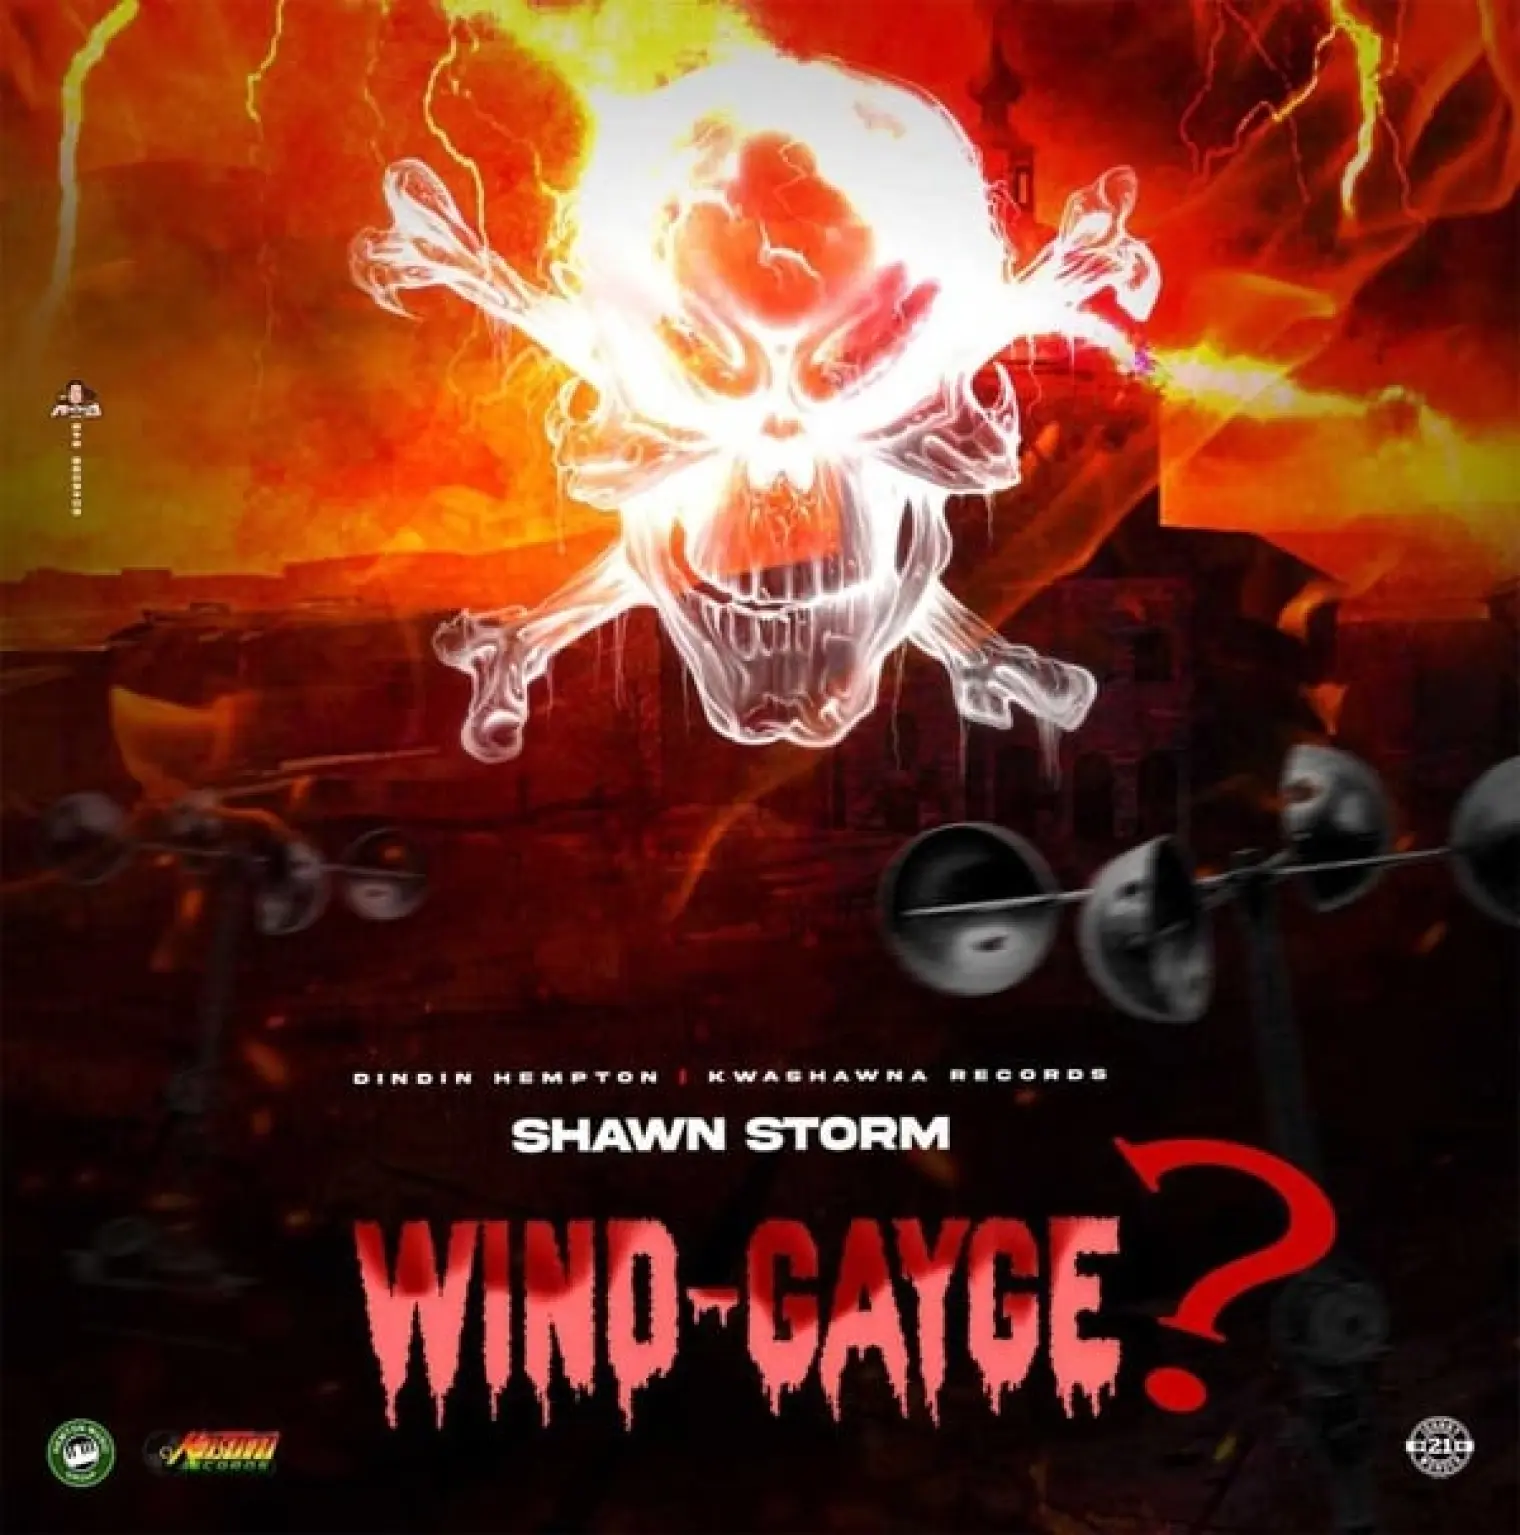 Wind Gayge -  Shawn Storm 